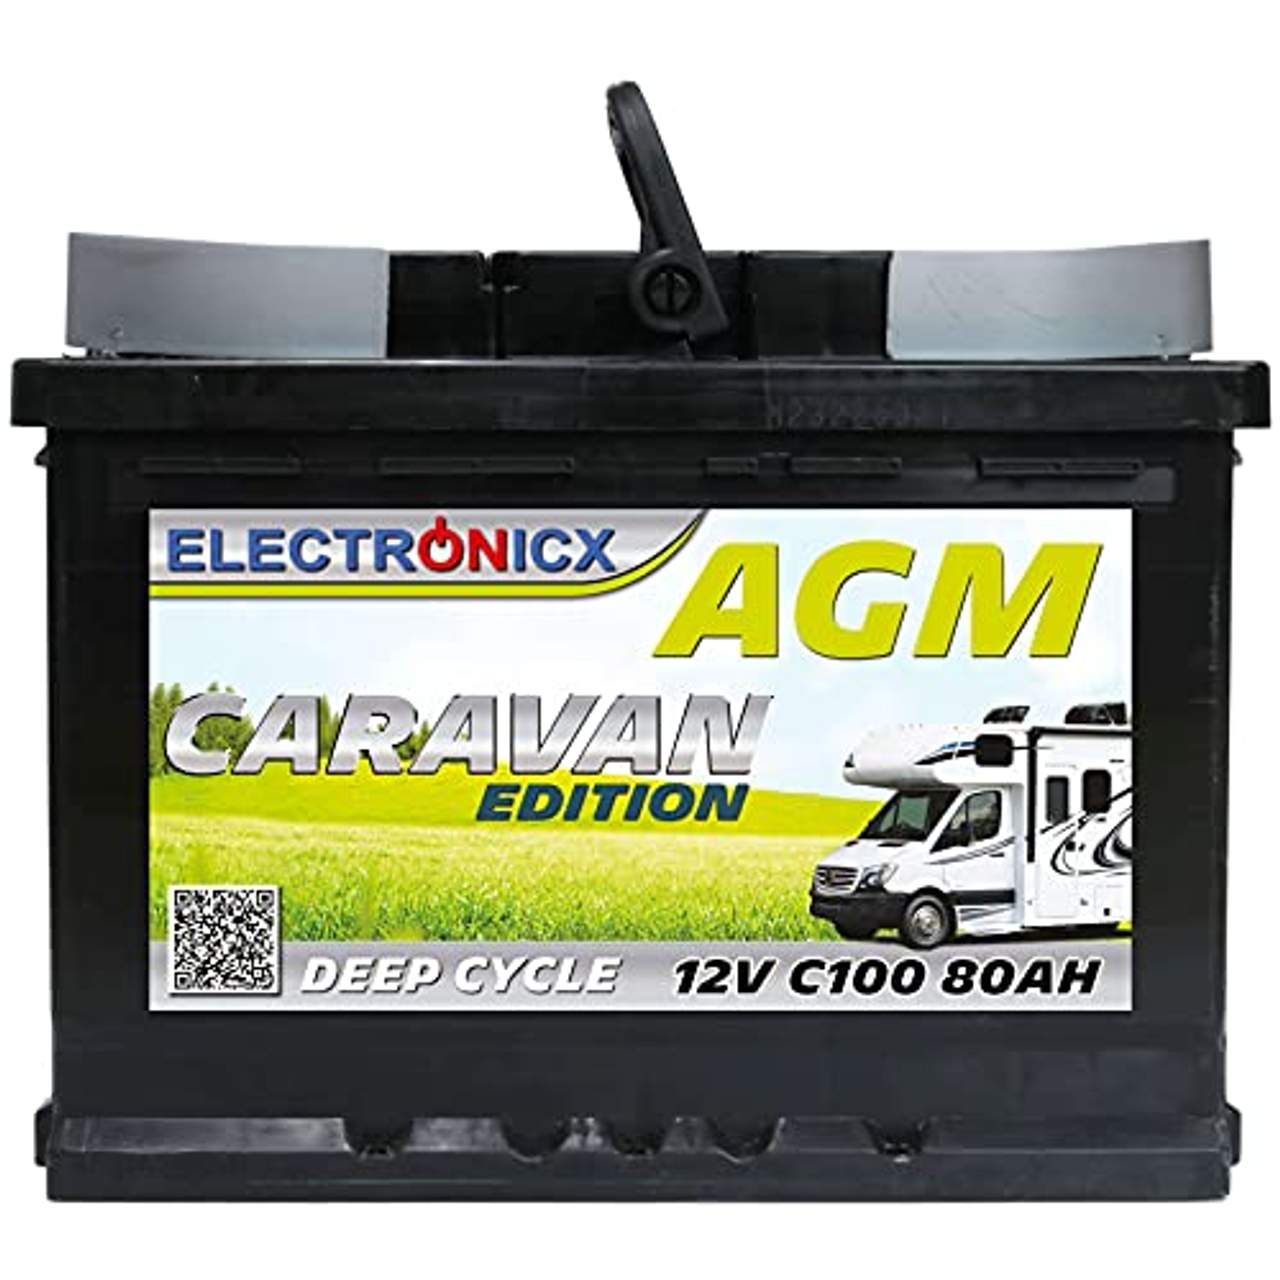 AGM Batterie 12v 80Ah Electronicx Caravan Edition Solarbatterie 12v Akku 12v Solar